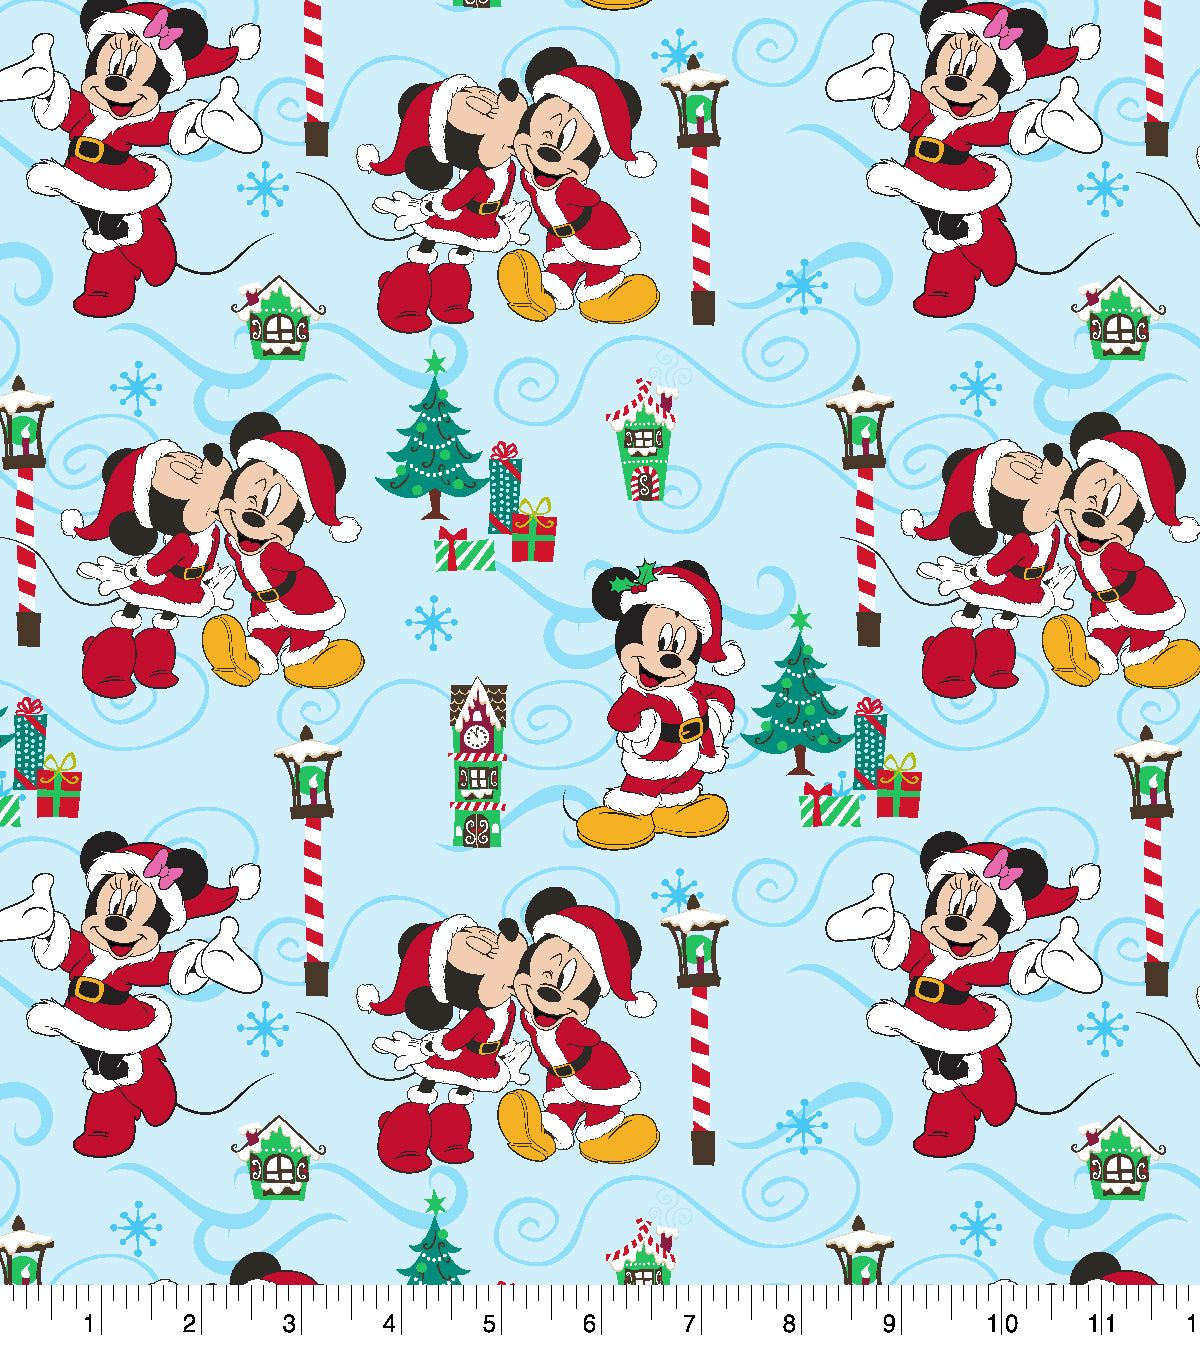 Disney Mickey & Minnie Mouse Holiday Fabric –